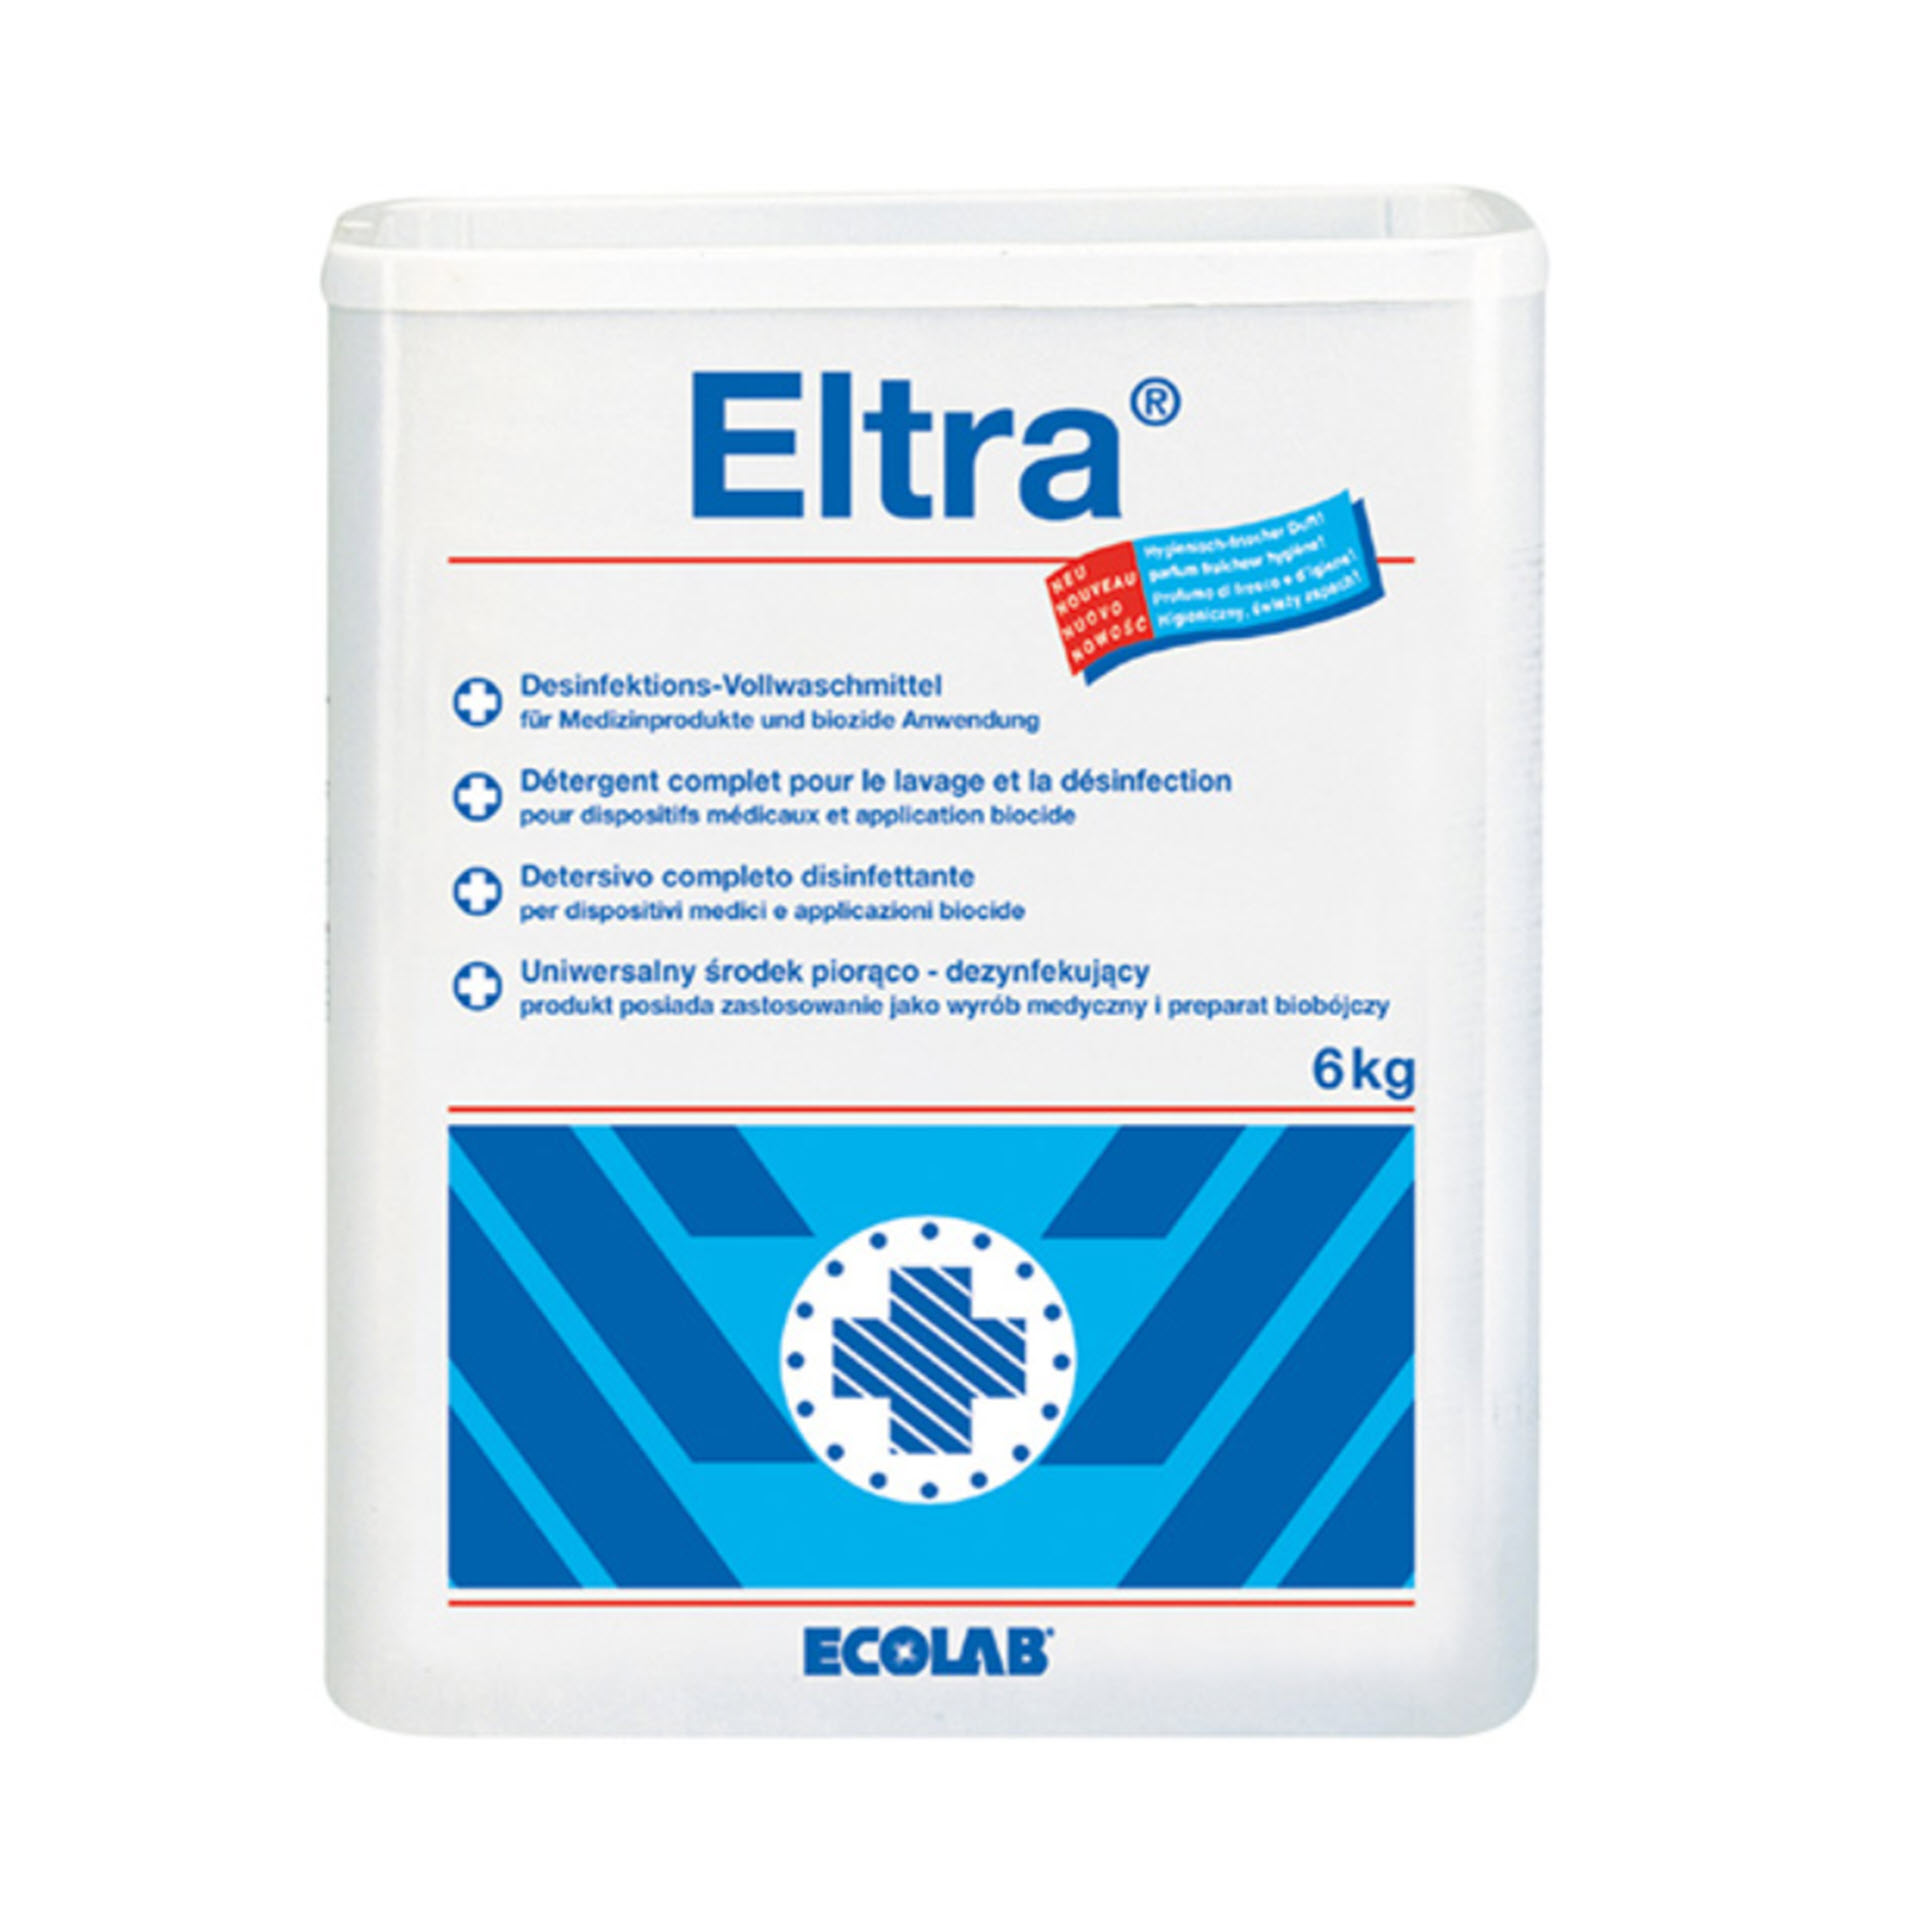 ECOLAB Eltra Desinfektions-Vollwaschmittel  6 kg Trommel